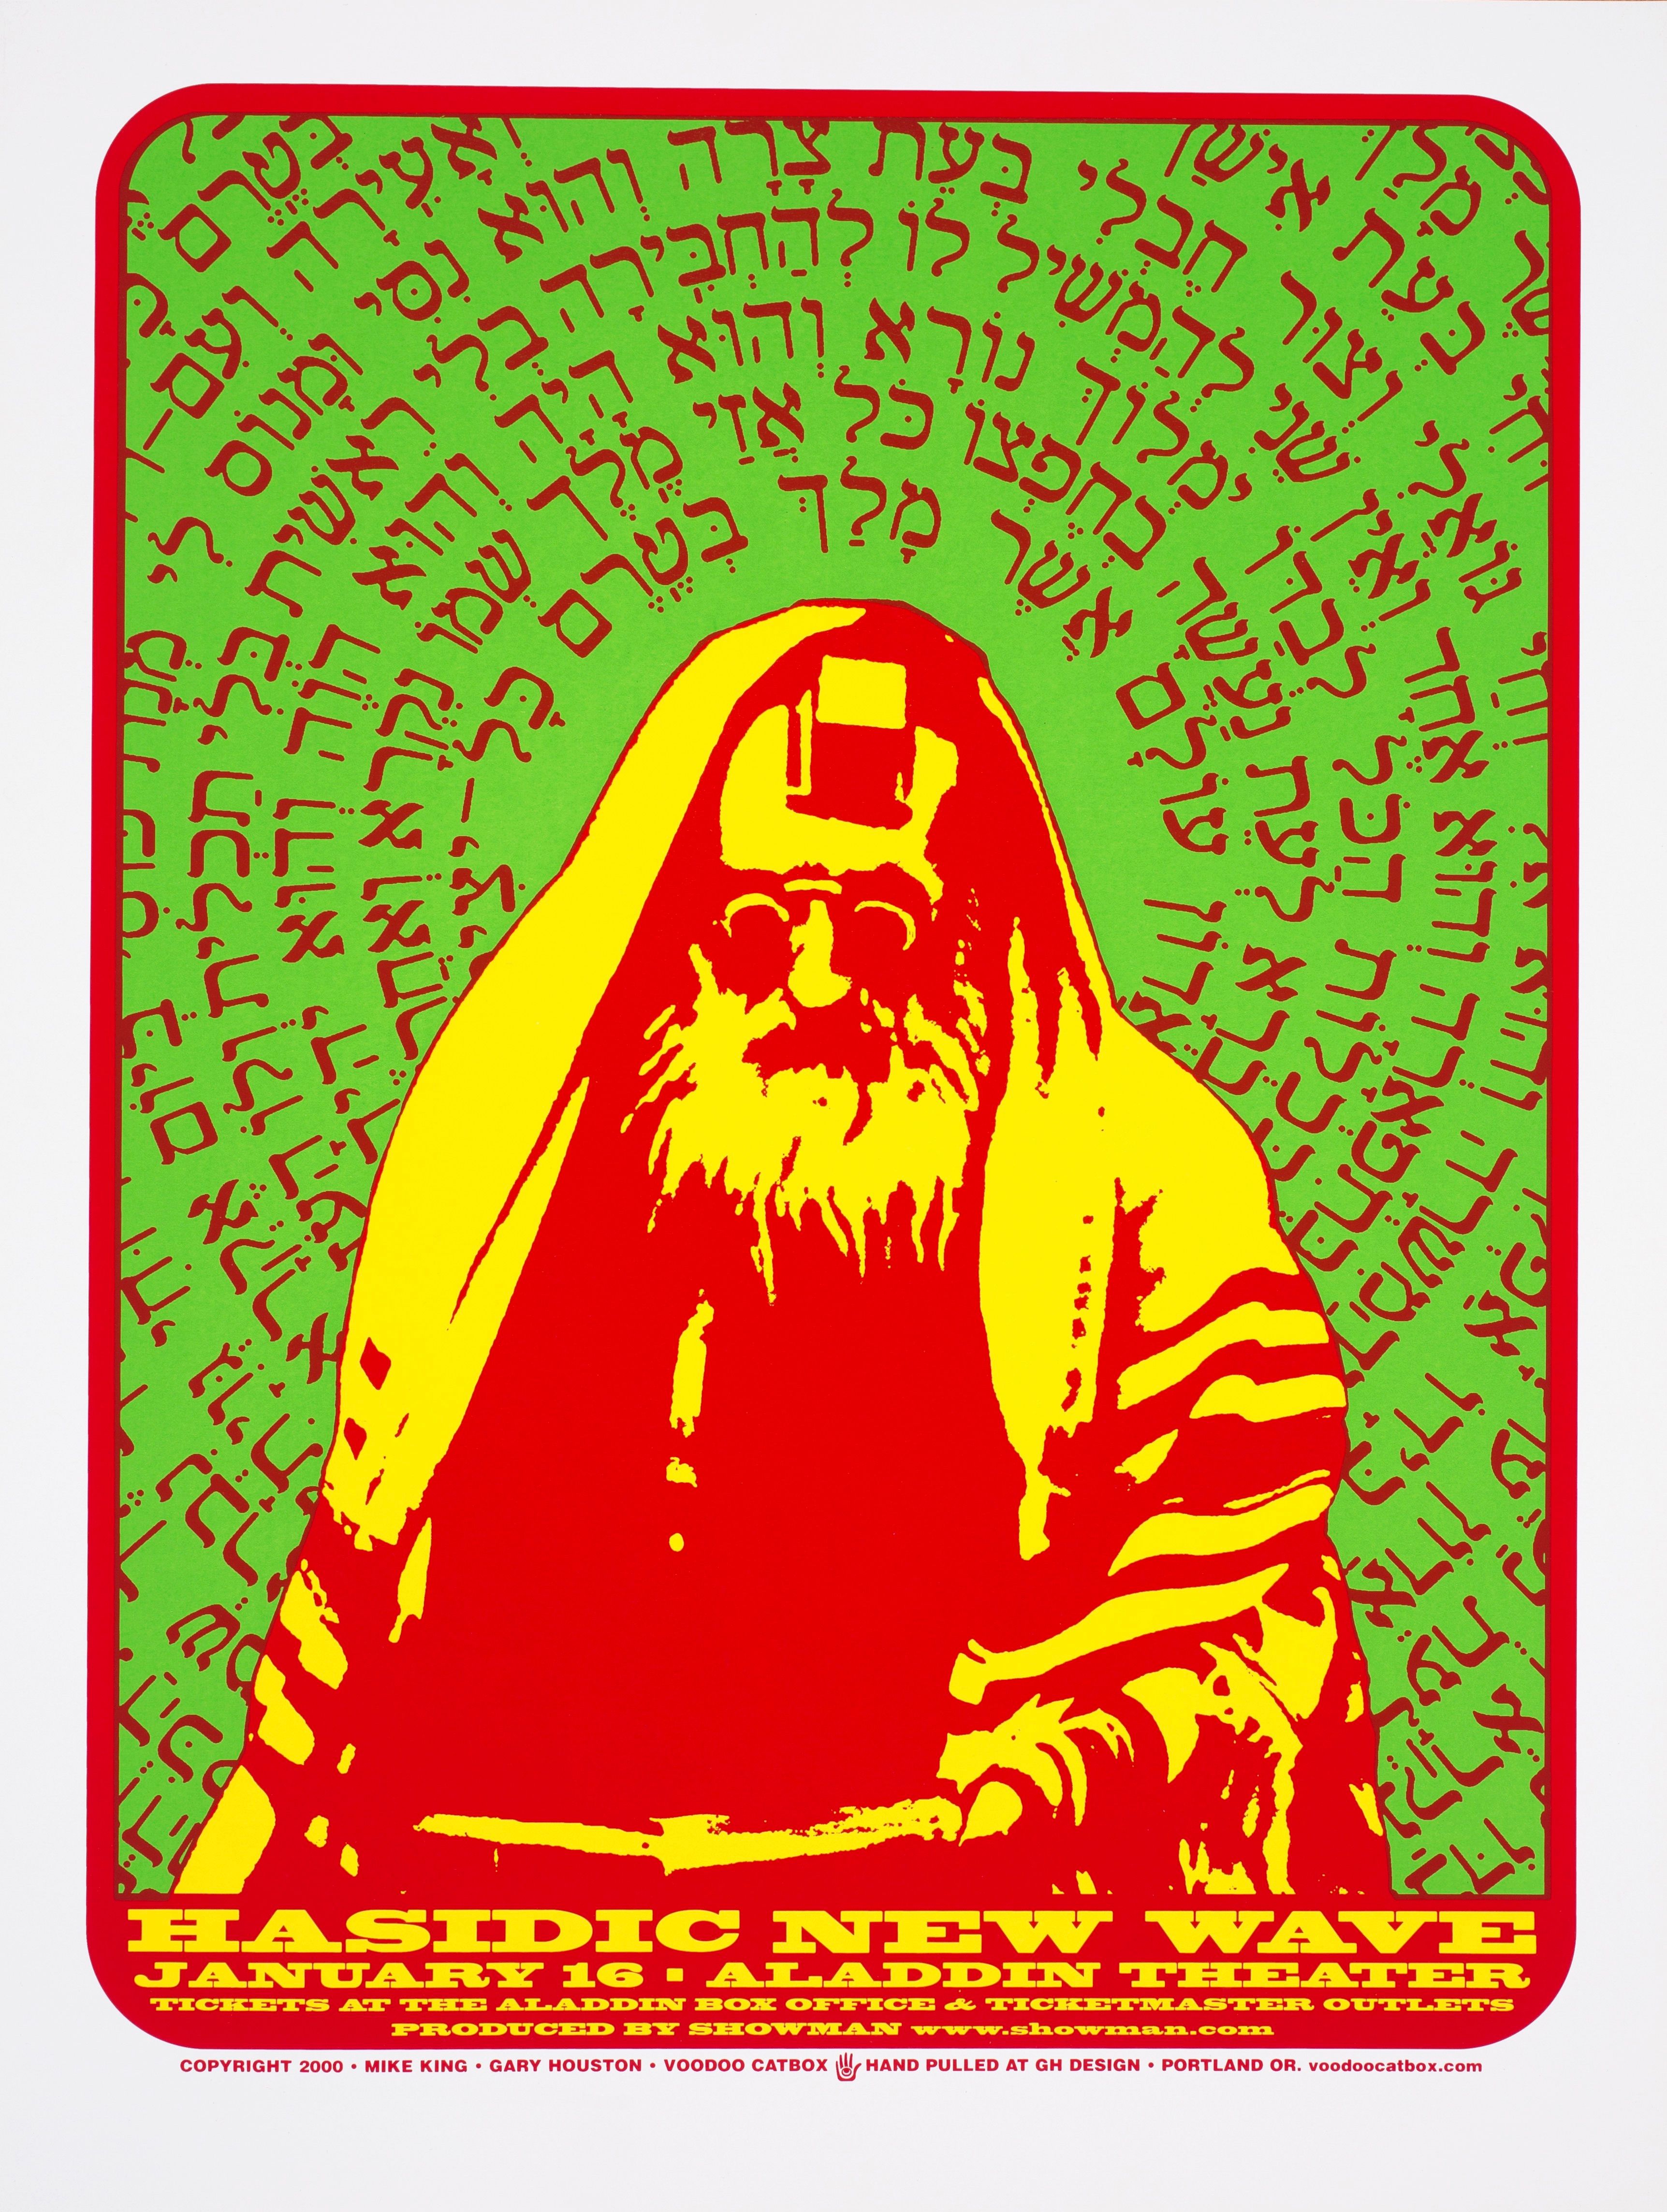 MXP-200.1 Hasidic New Wave 2000 Aladdin Theater  Jan 16 Concert Poster